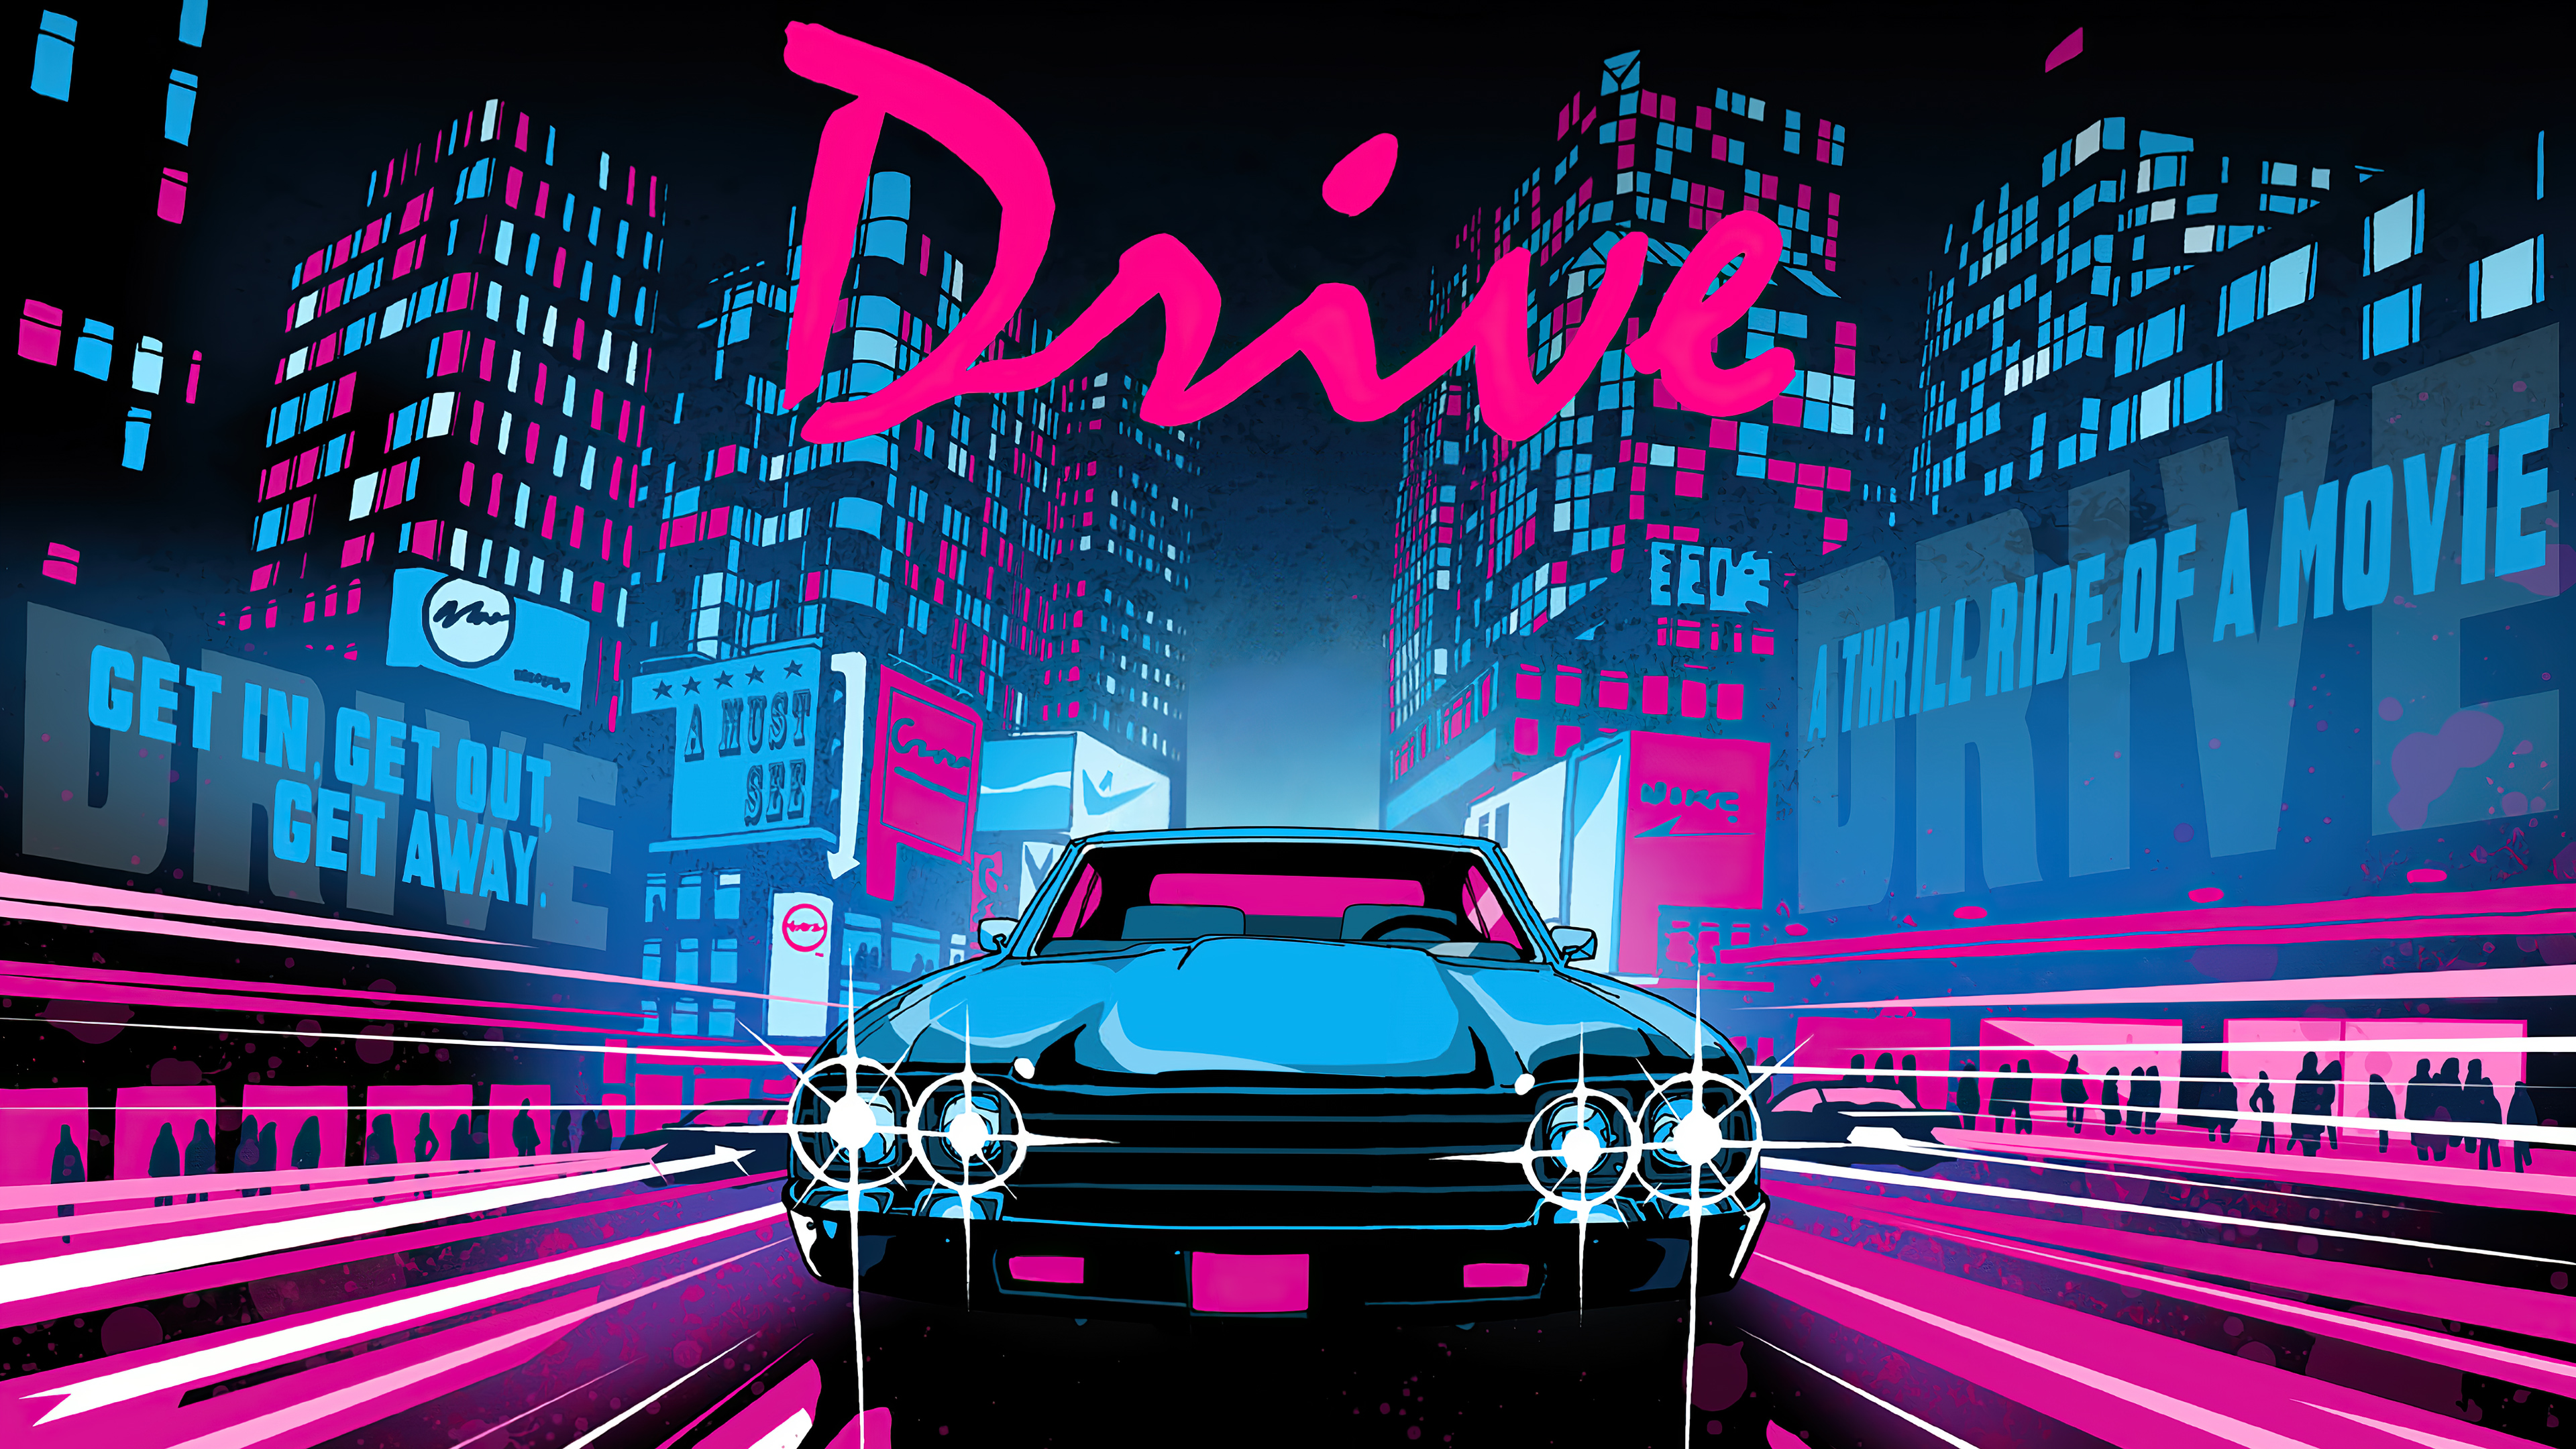 Drive 2011